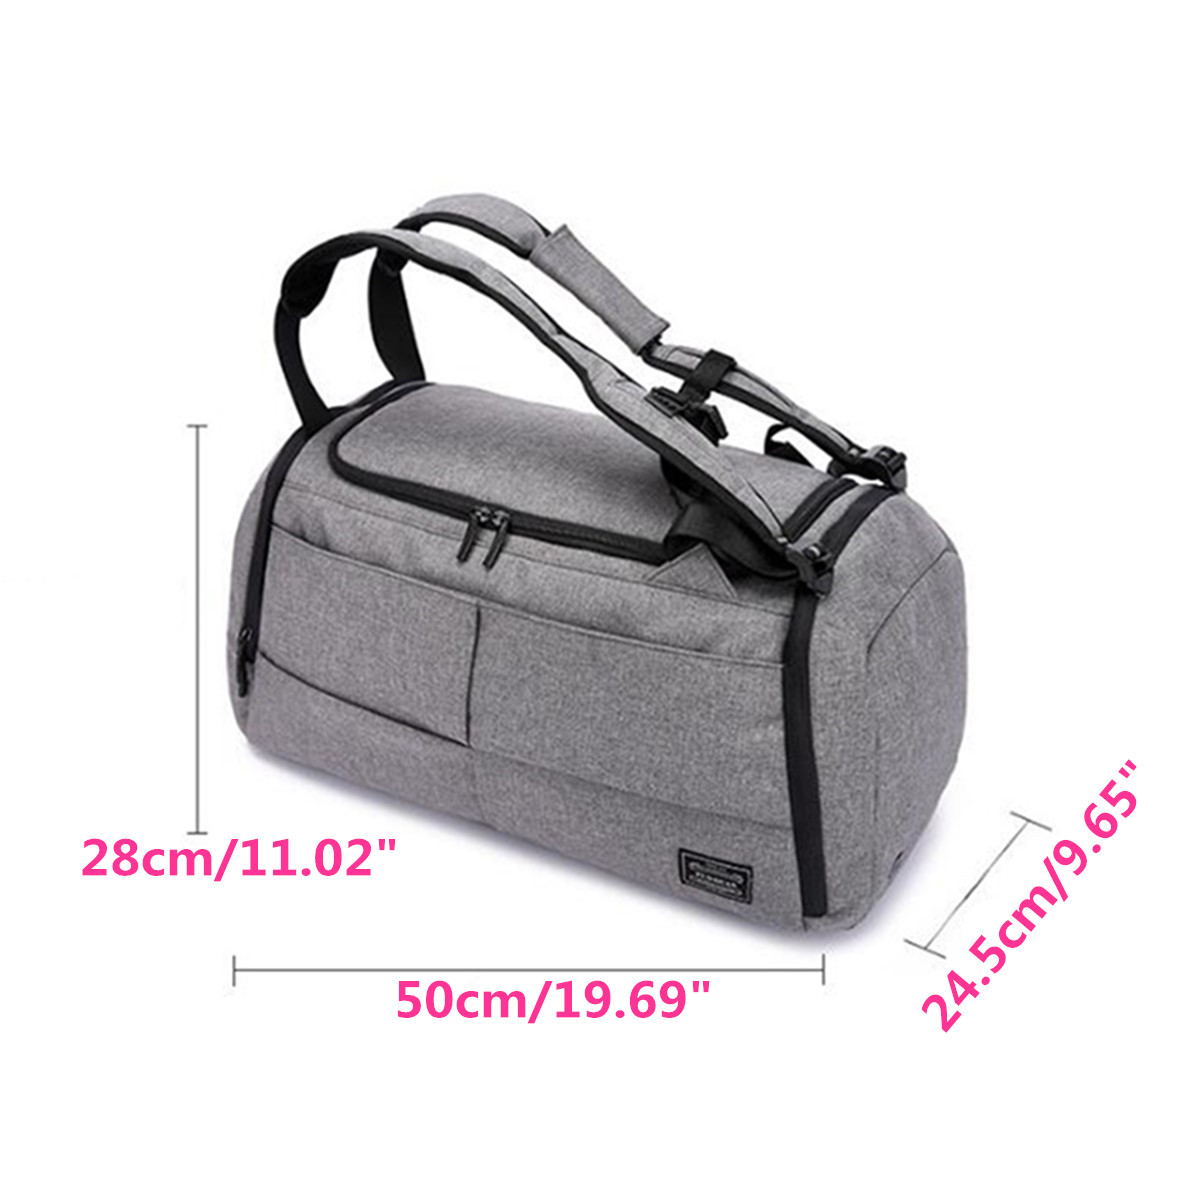 Outdoor-Men-Women-Luggage-Travel-Bag-Satchel-Shoulder-Gym-Sports-Handbag-with-Shoes-Storage-1279187-2